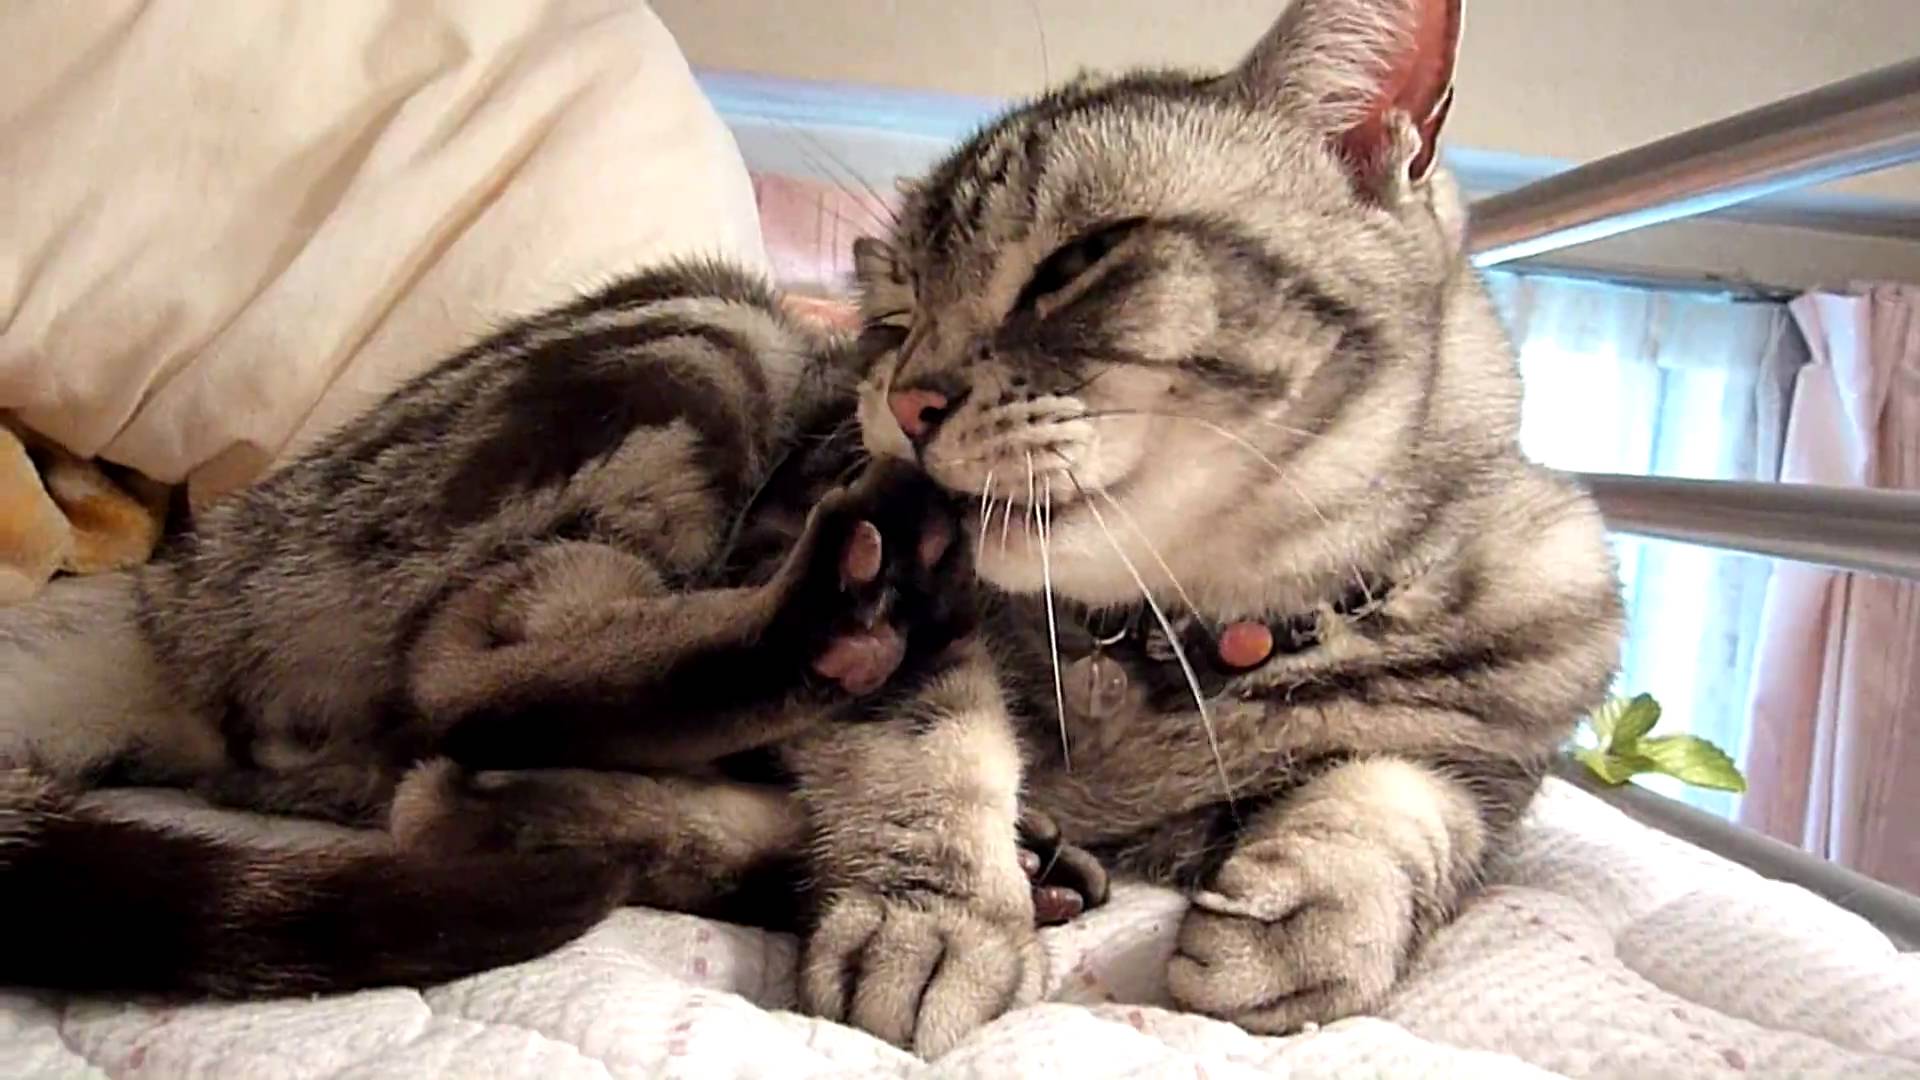 Cat licking itself